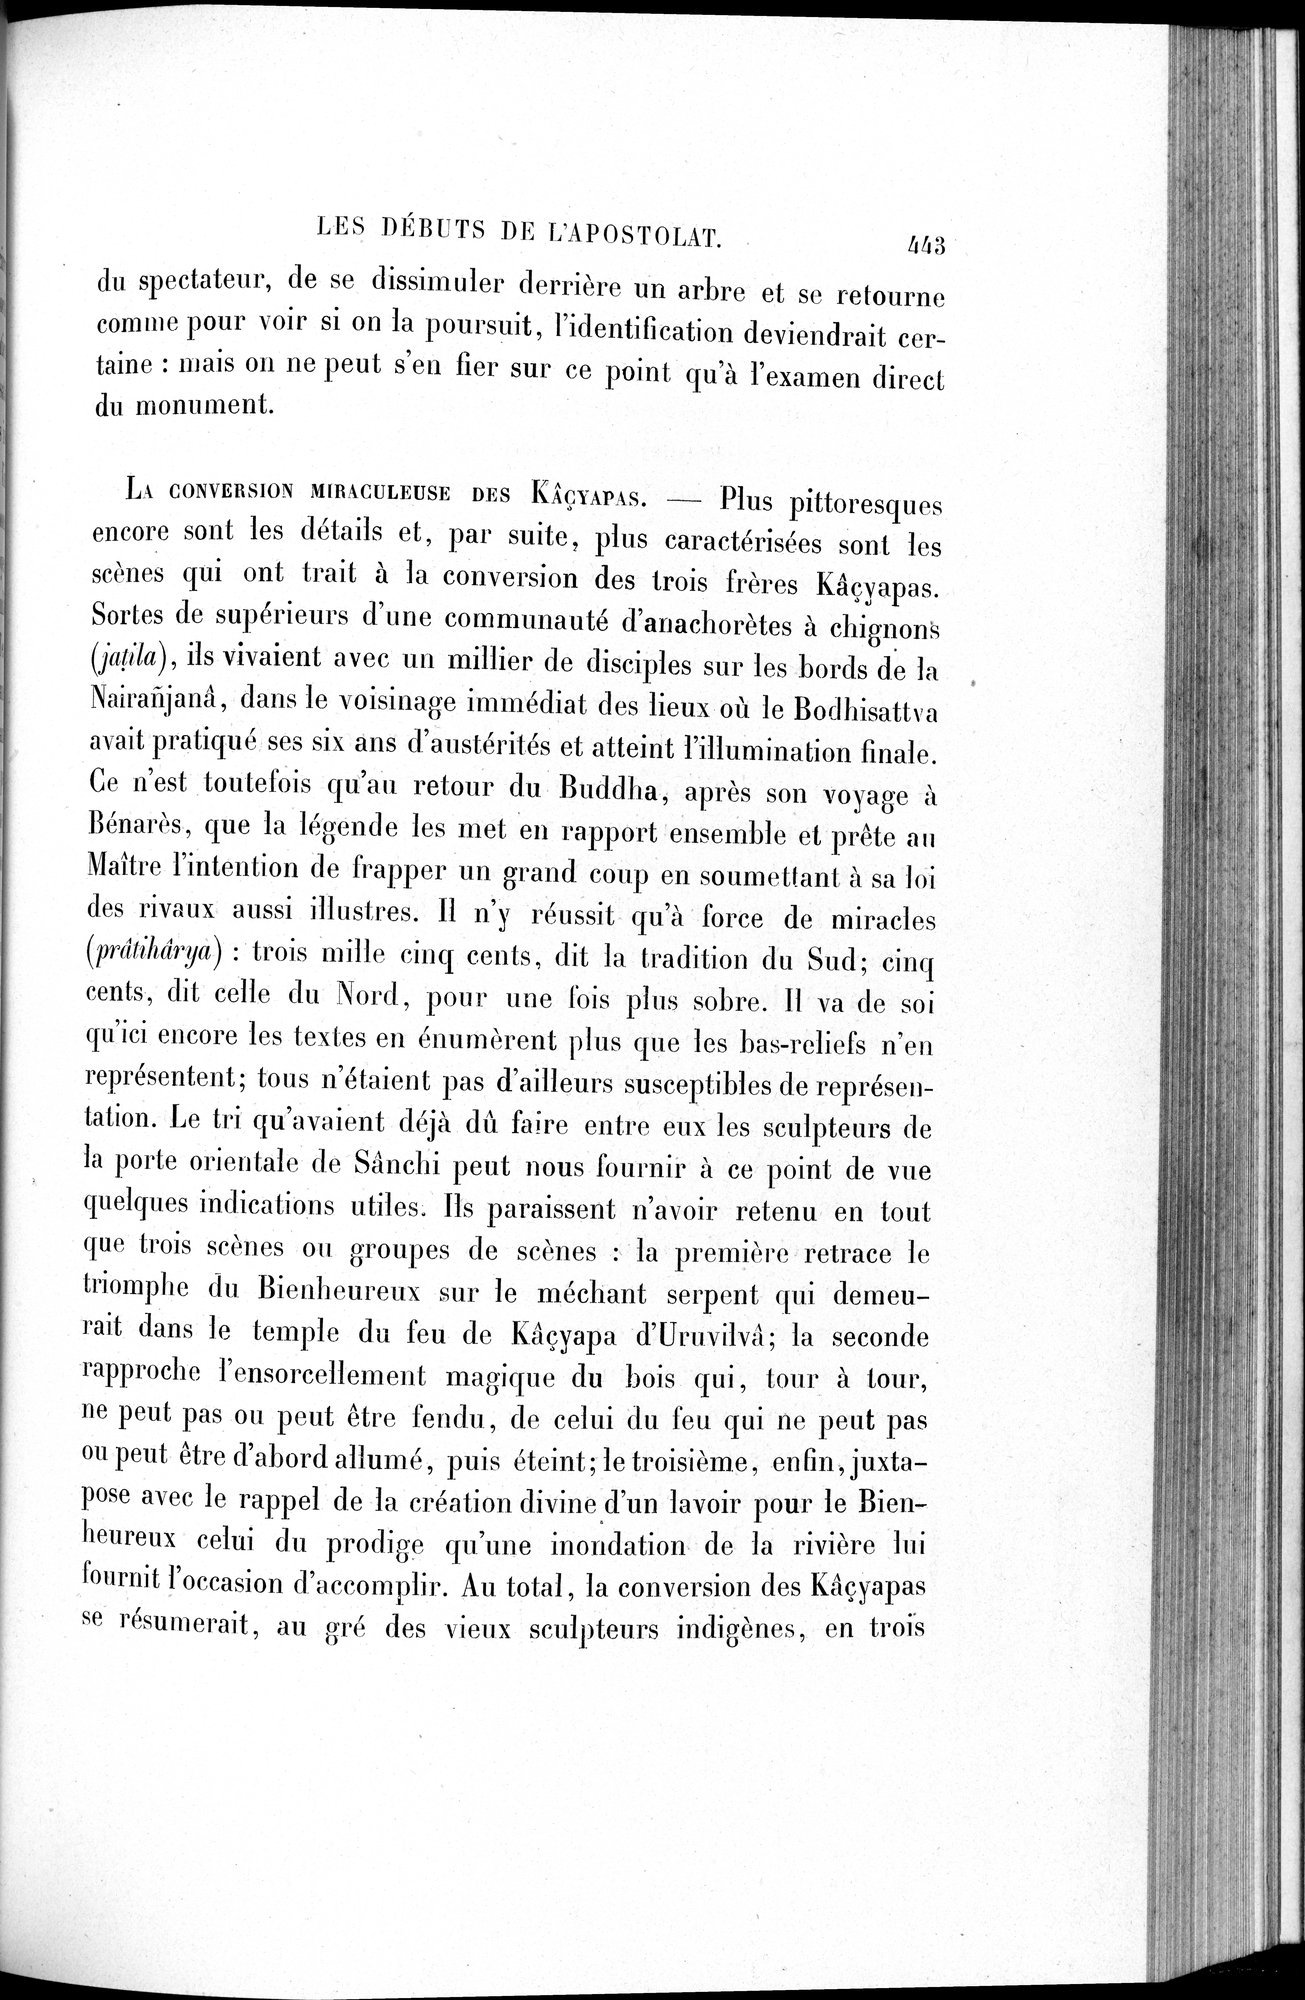 L'art Greco-Bouddhique du Gandhâra : vol.1 / Page 469 (Grayscale High Resolution Image)